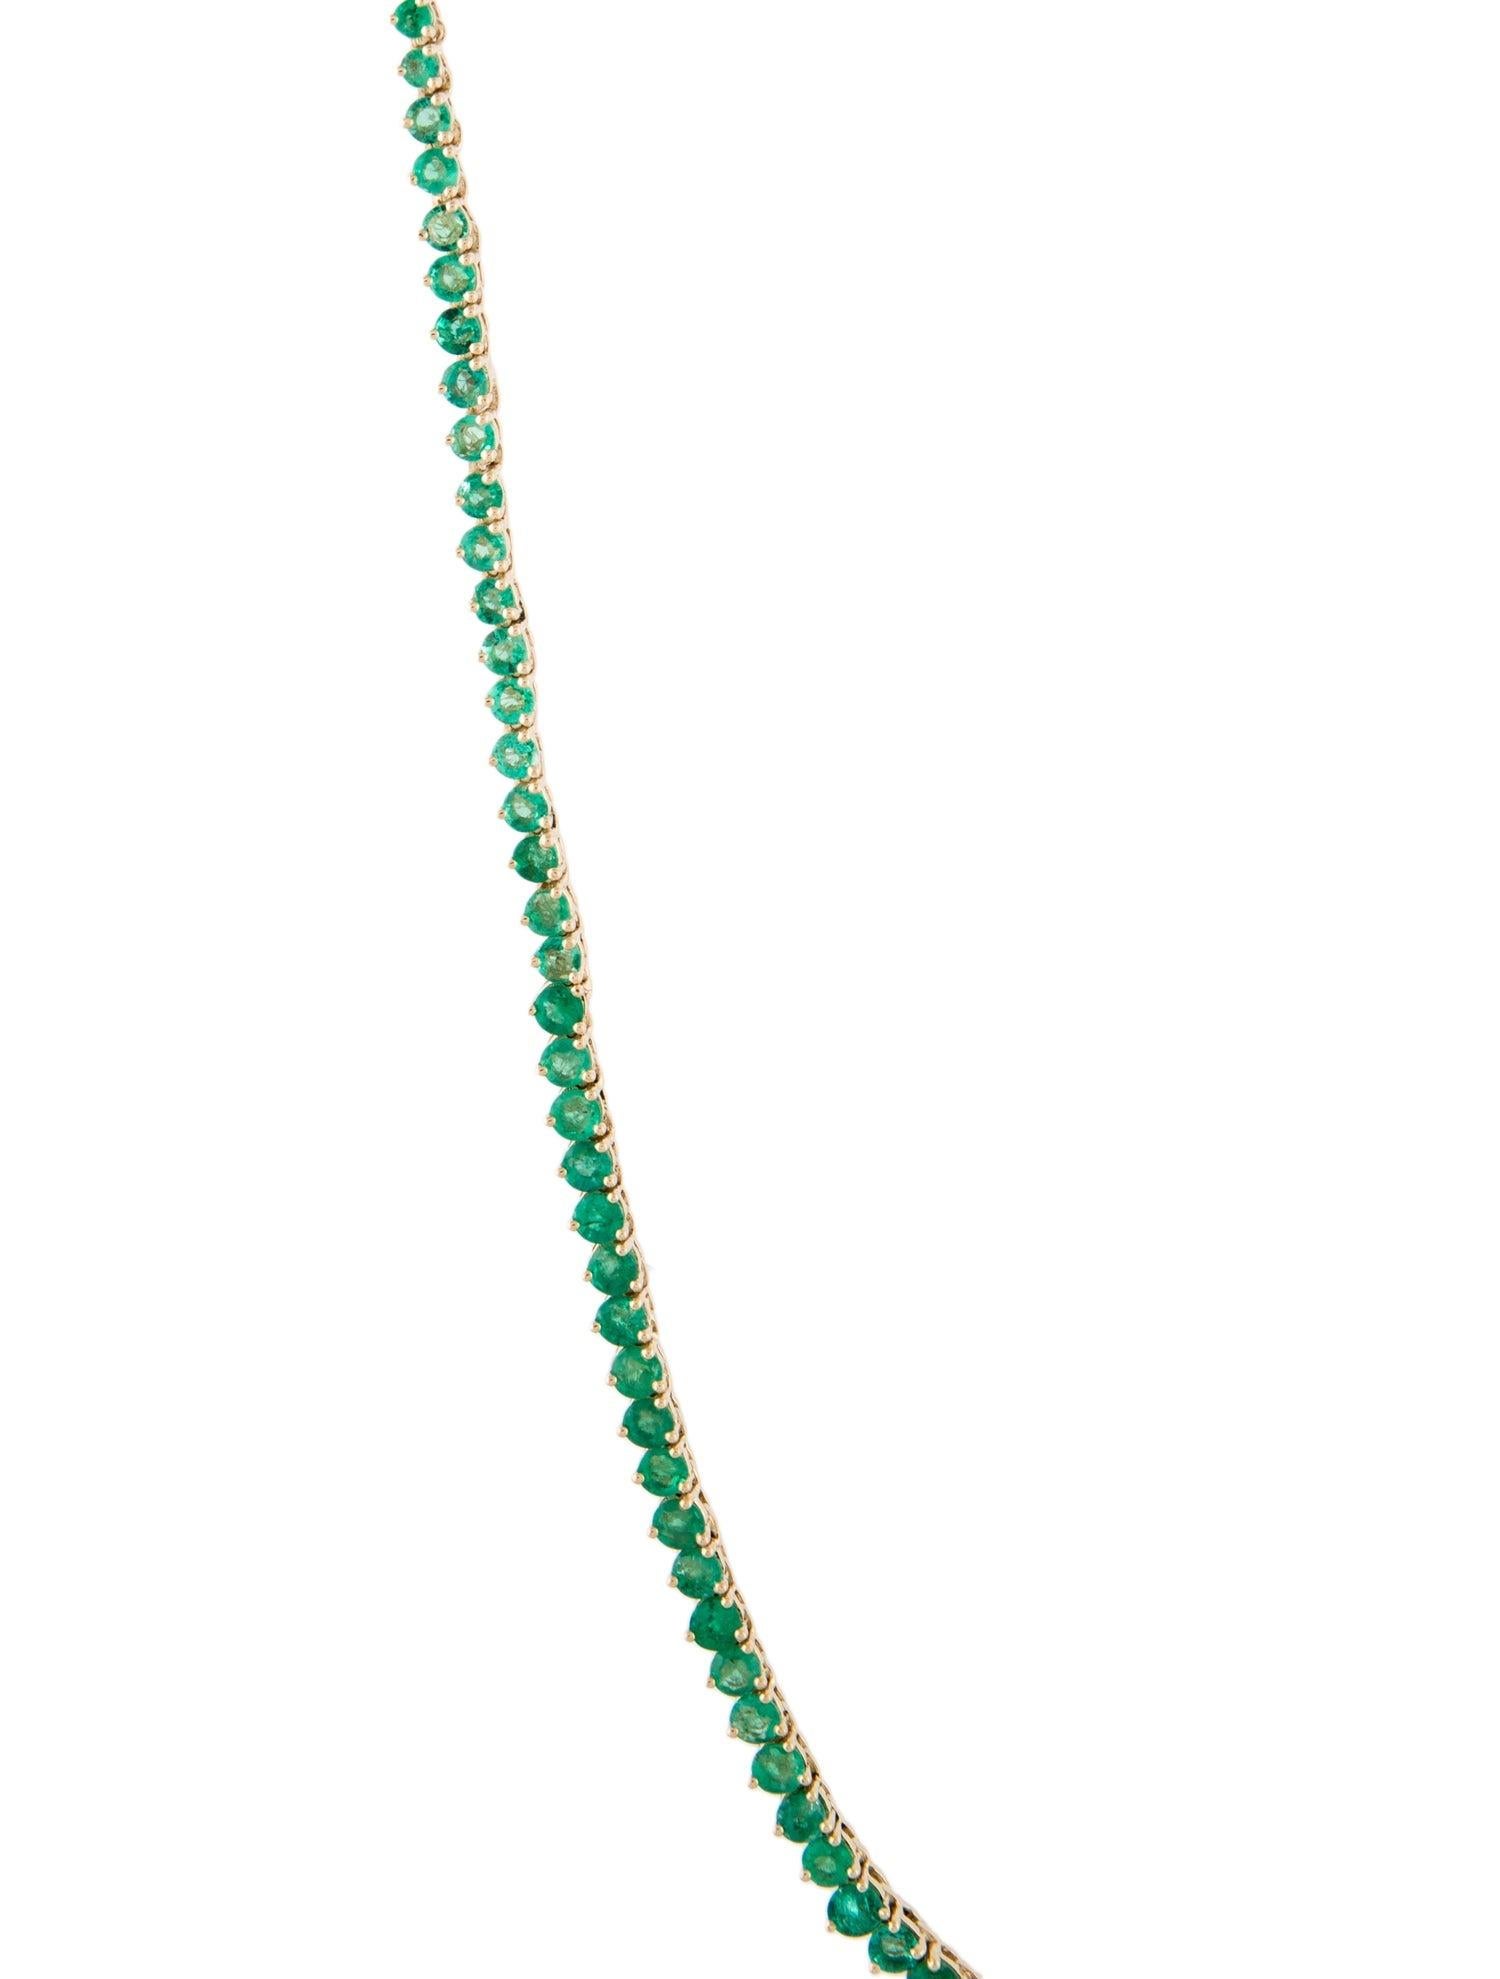 Brilliant Cut 14K Emerald Graduated Necklace: Exquisite Luxury Statement Jewelry Piece For Sale